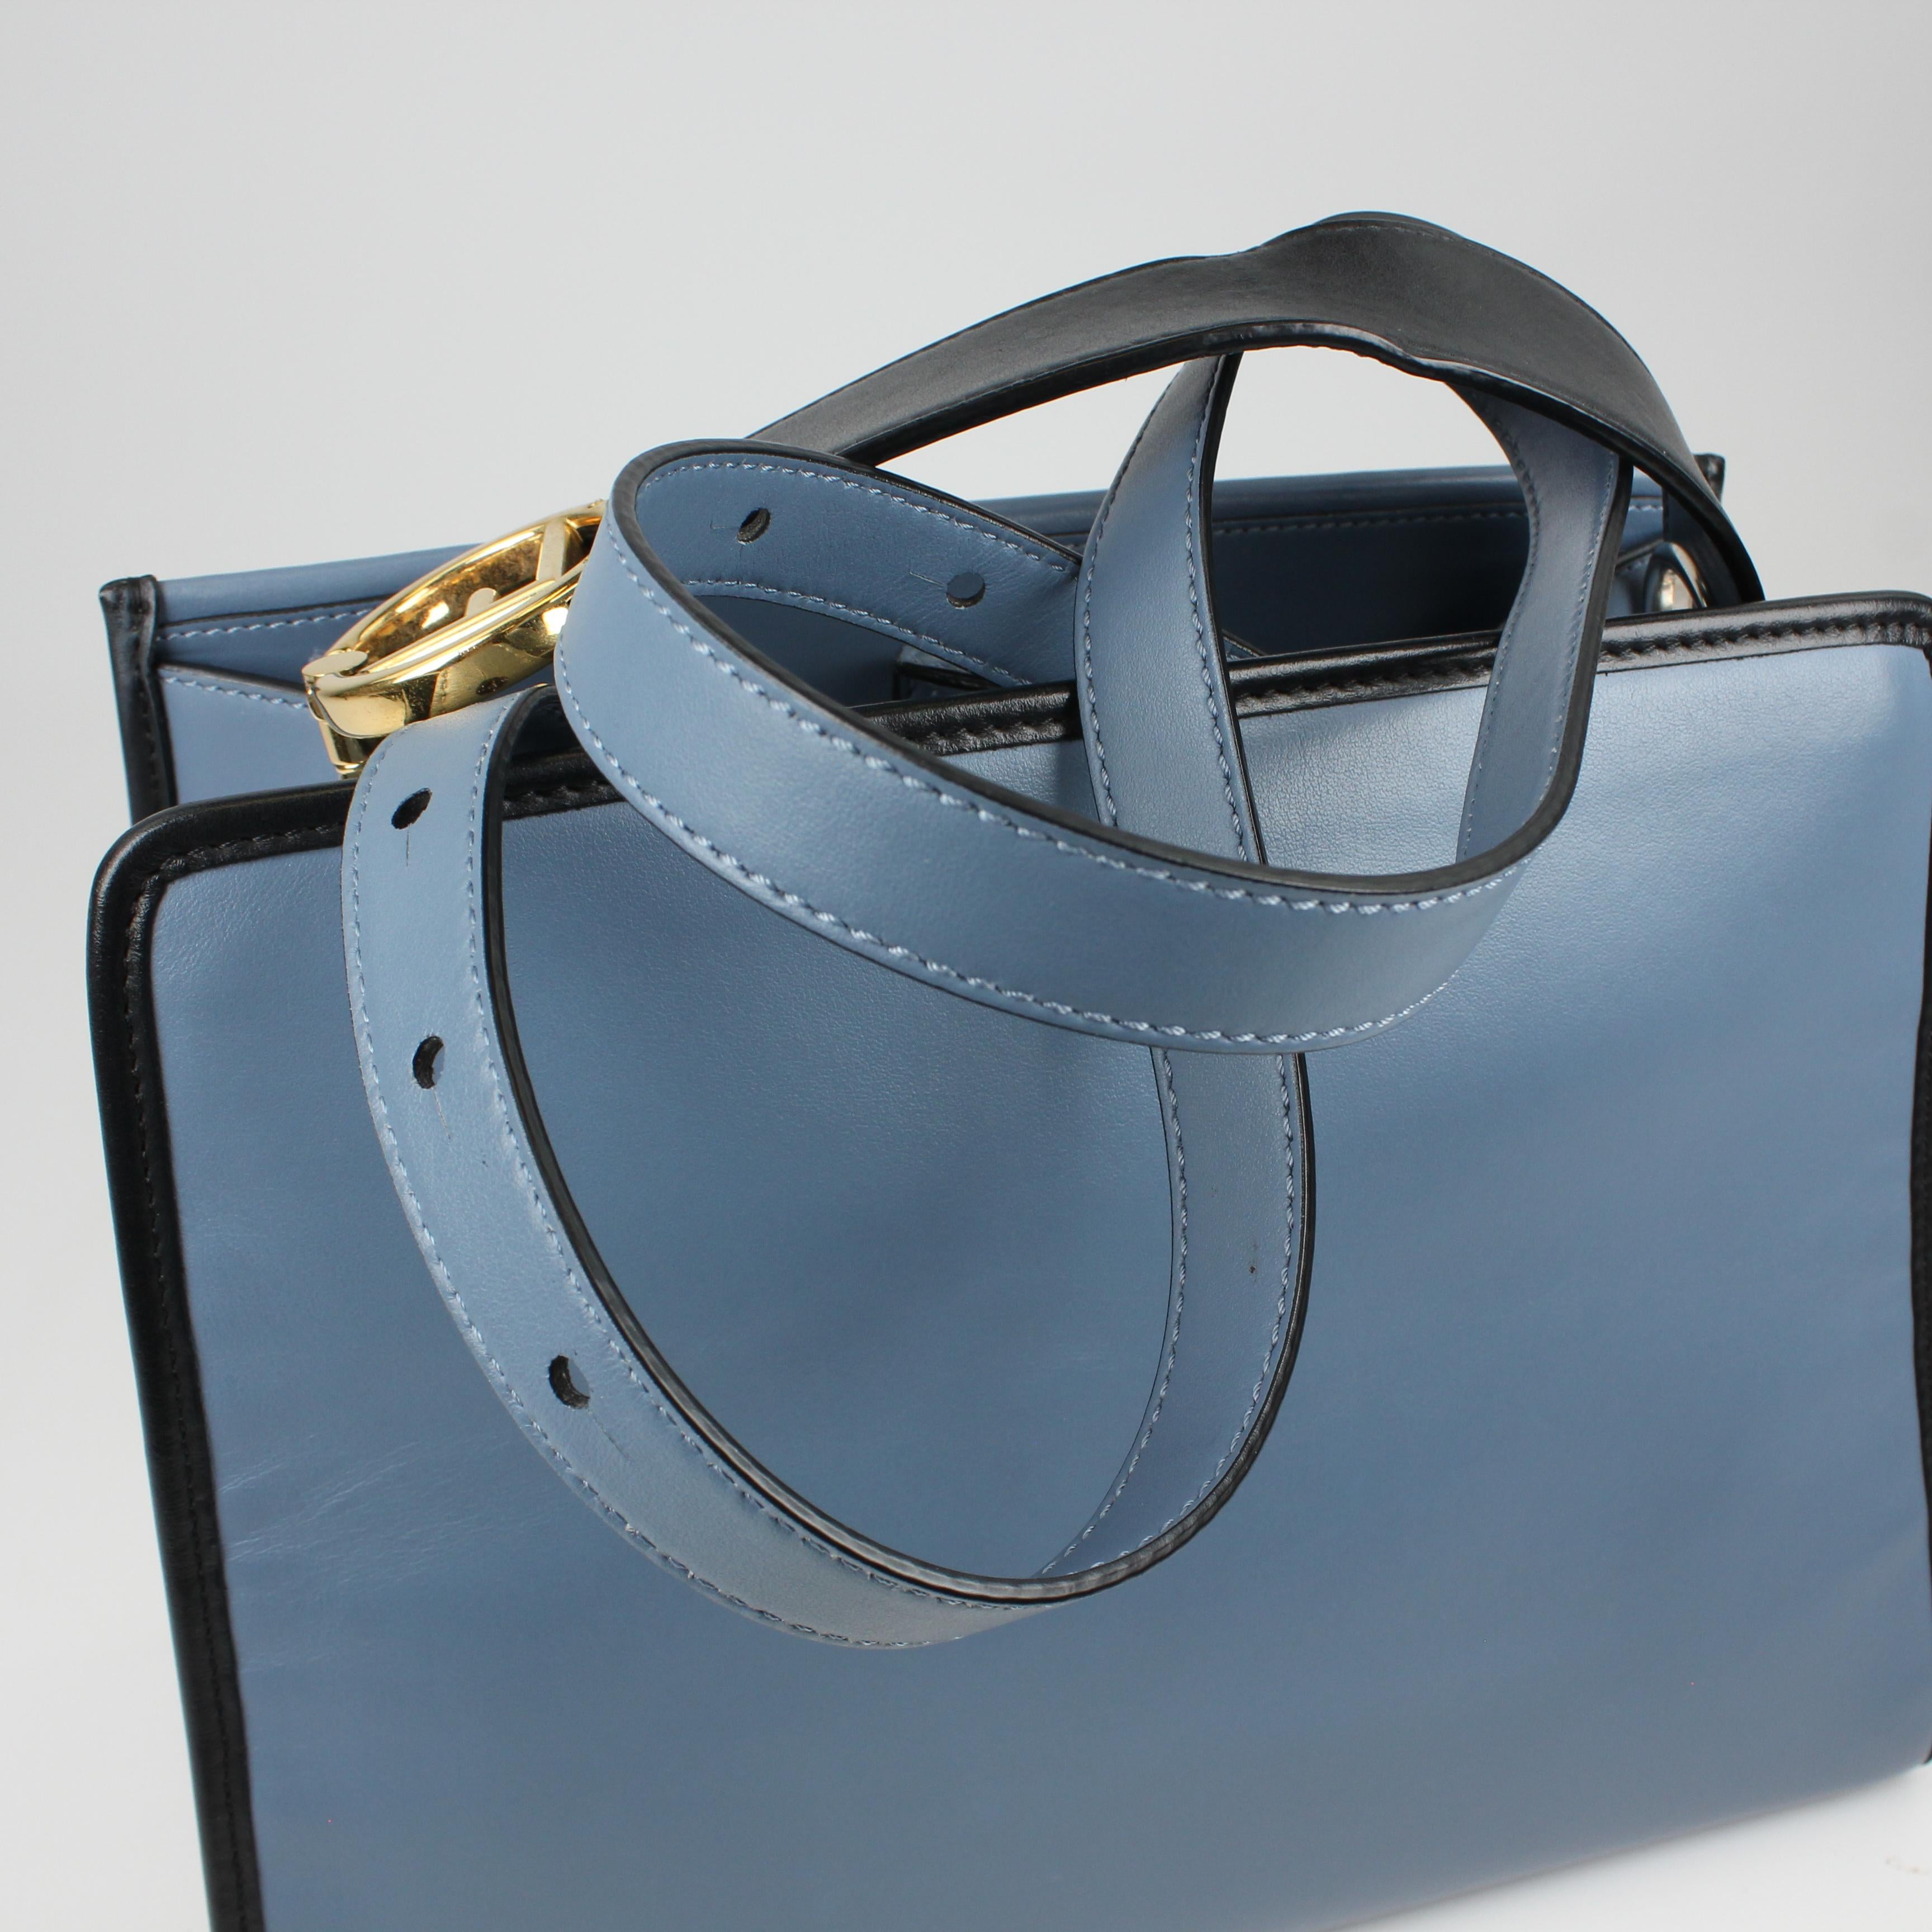 Fendi Runaway Handbag in Leather 8